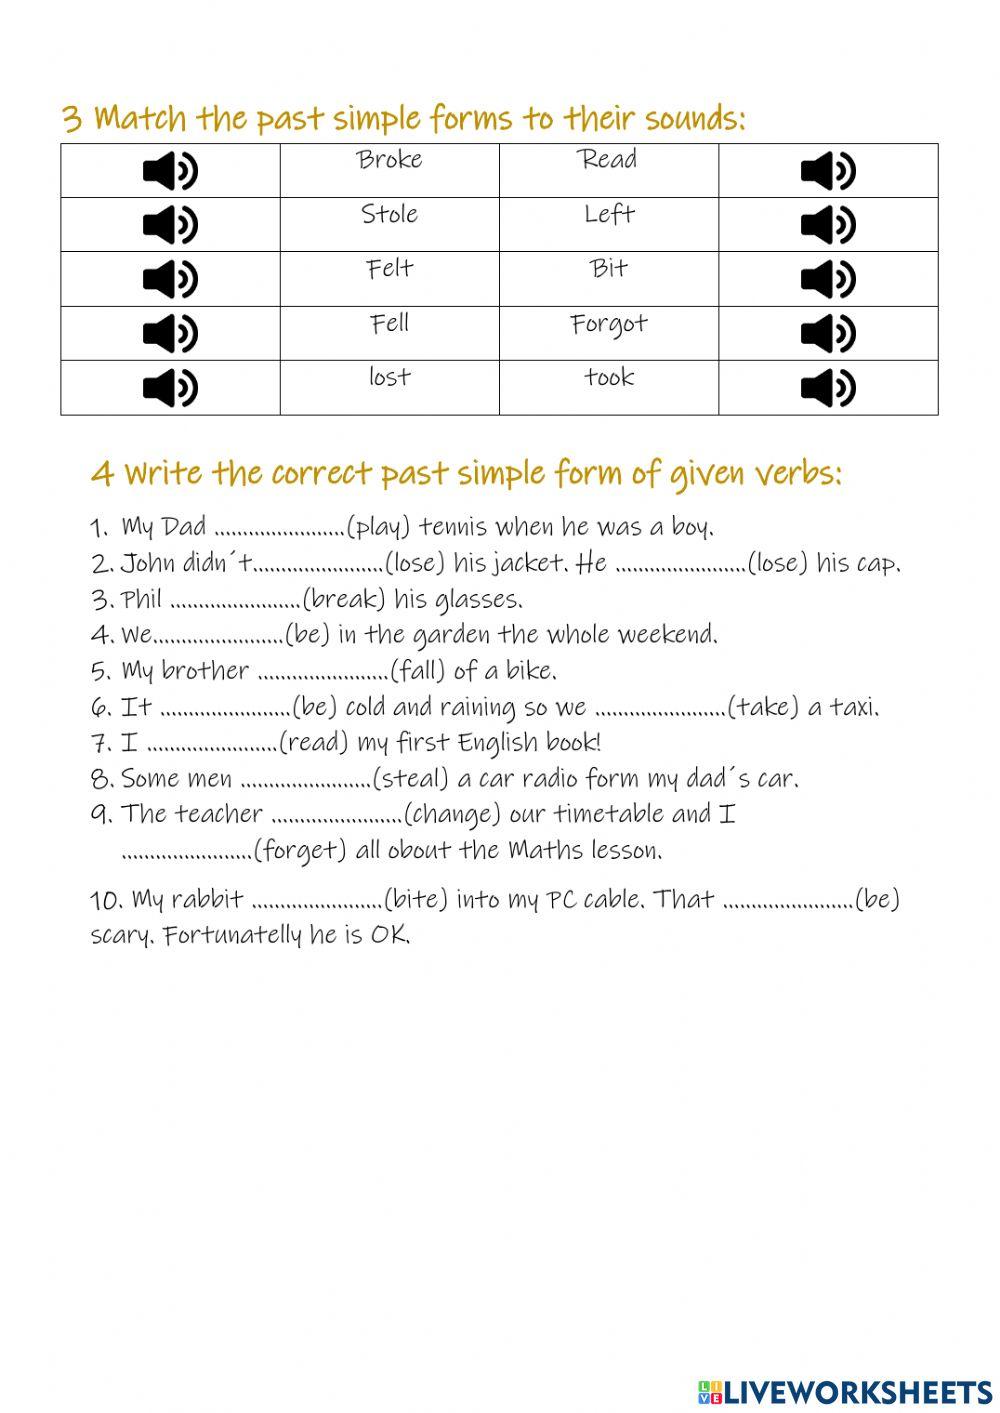 Past Simple of Irregular verbs 1 (Project 2 - Unit 3C)